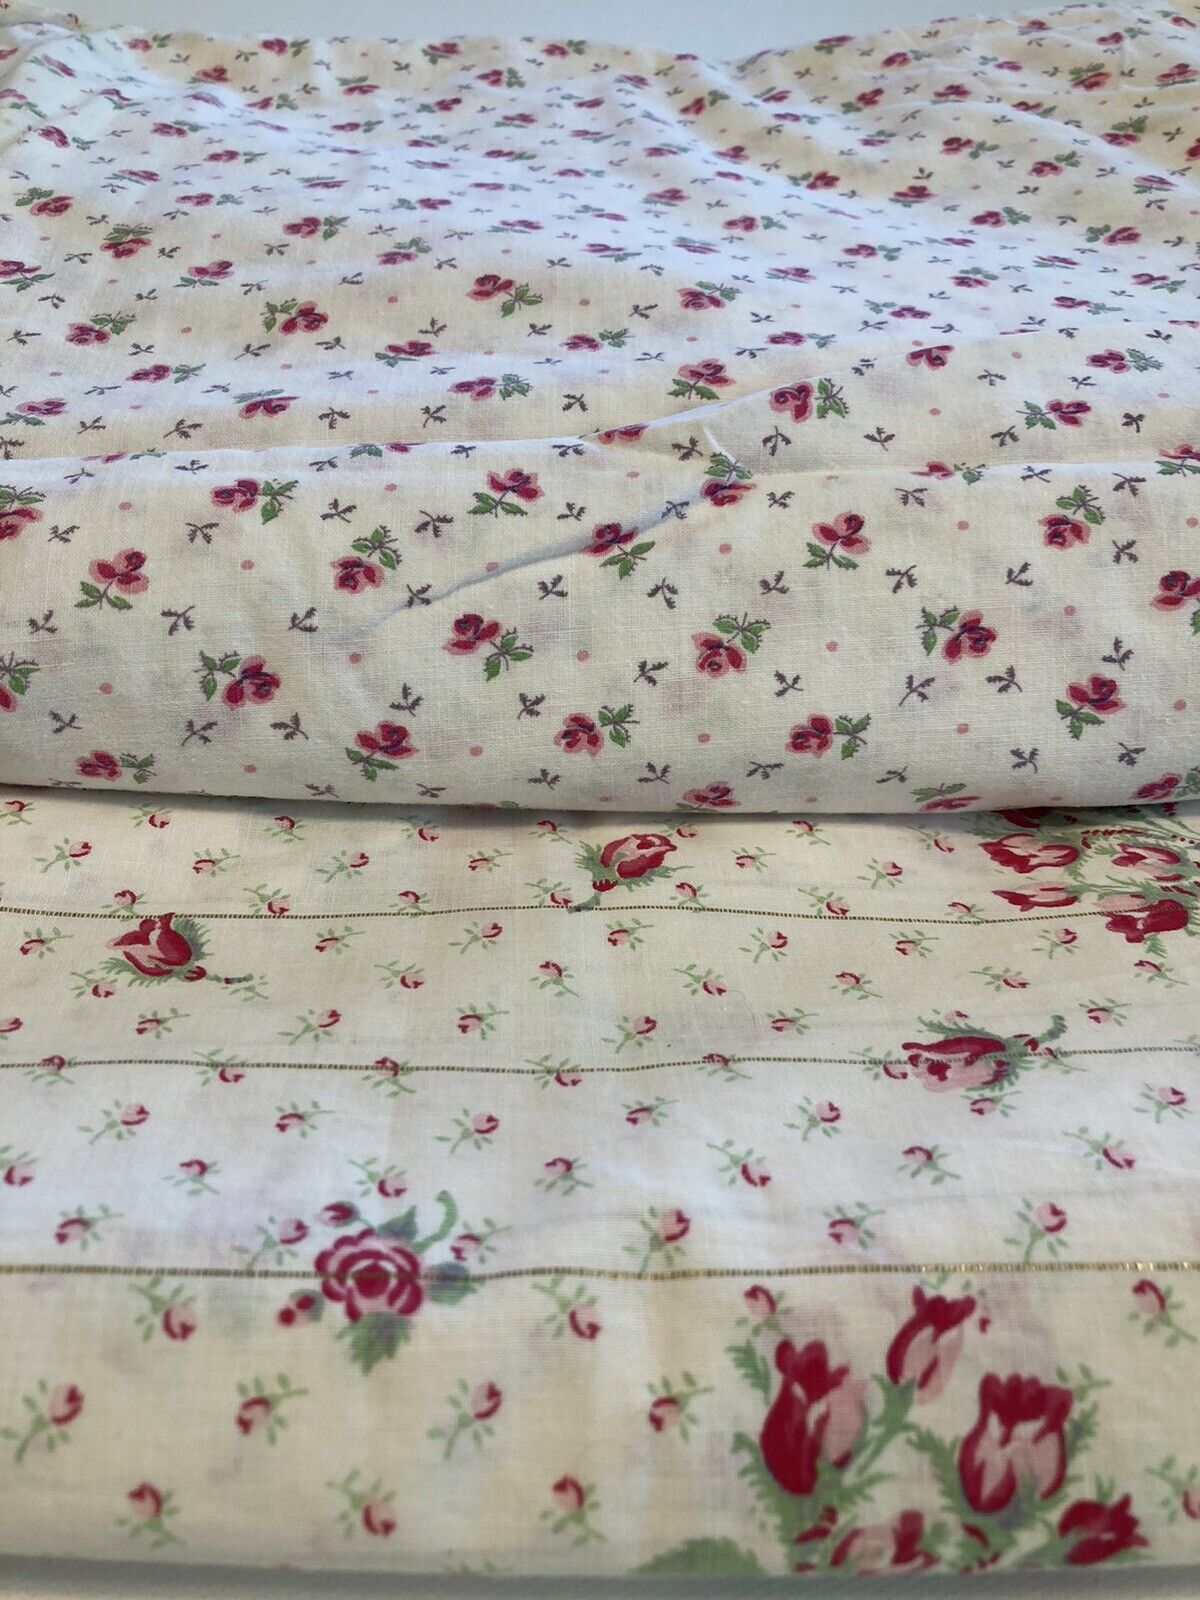 2 Vintage Matress/Duvet Cover Full Size Pink Floral Print Cotton Zipper Closure